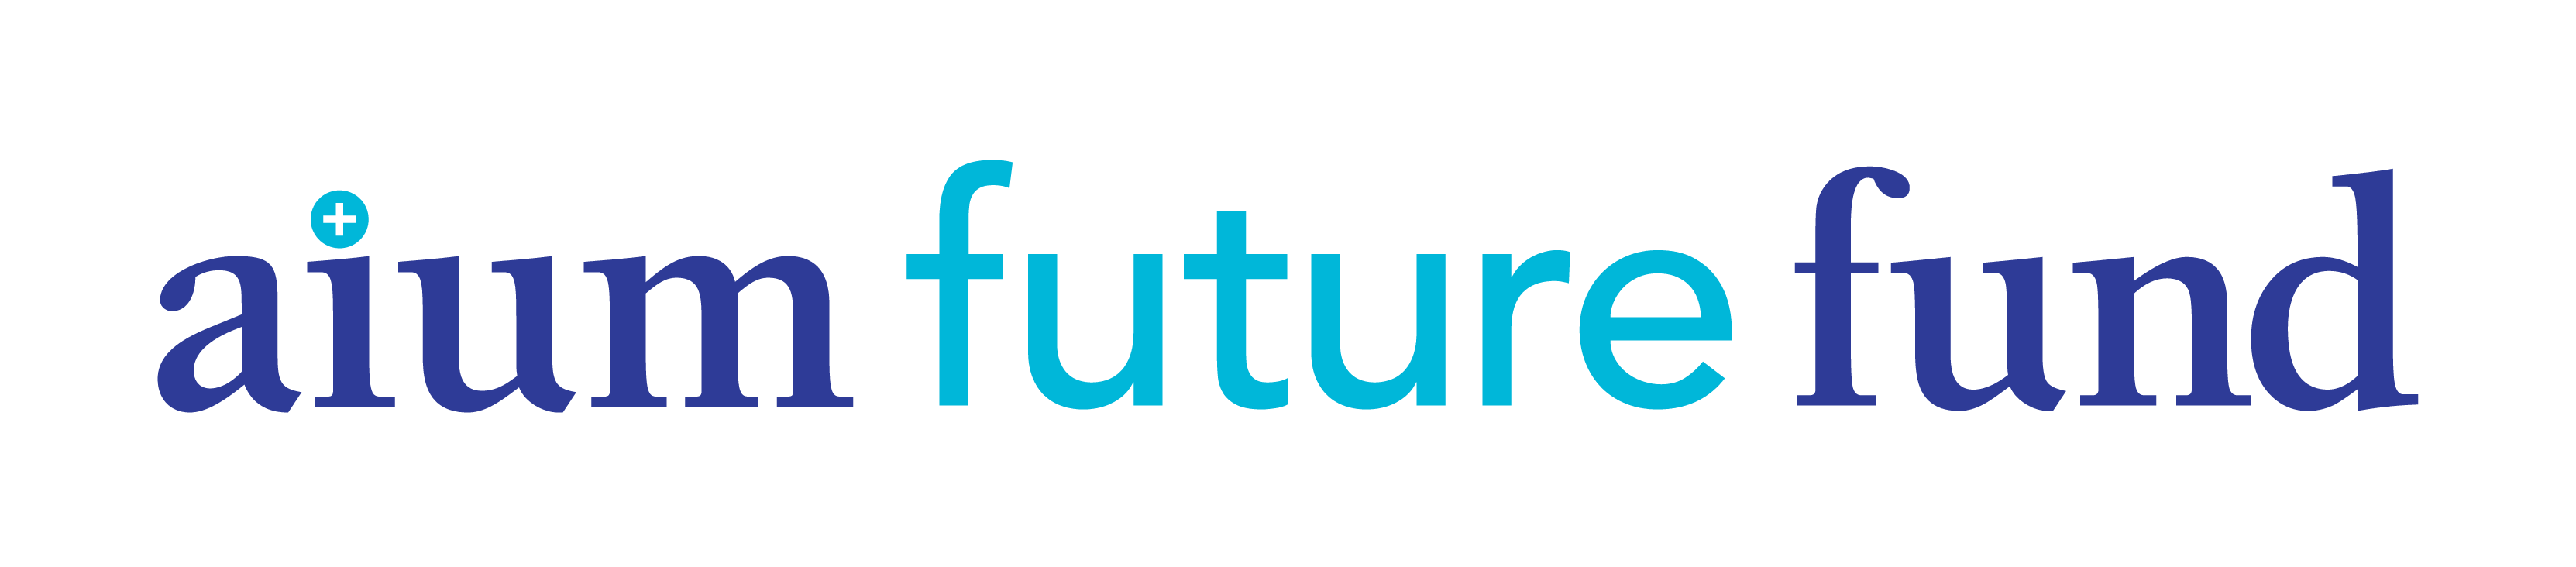 AIUM Future Fund logo CMYK HIGHRES 01 002